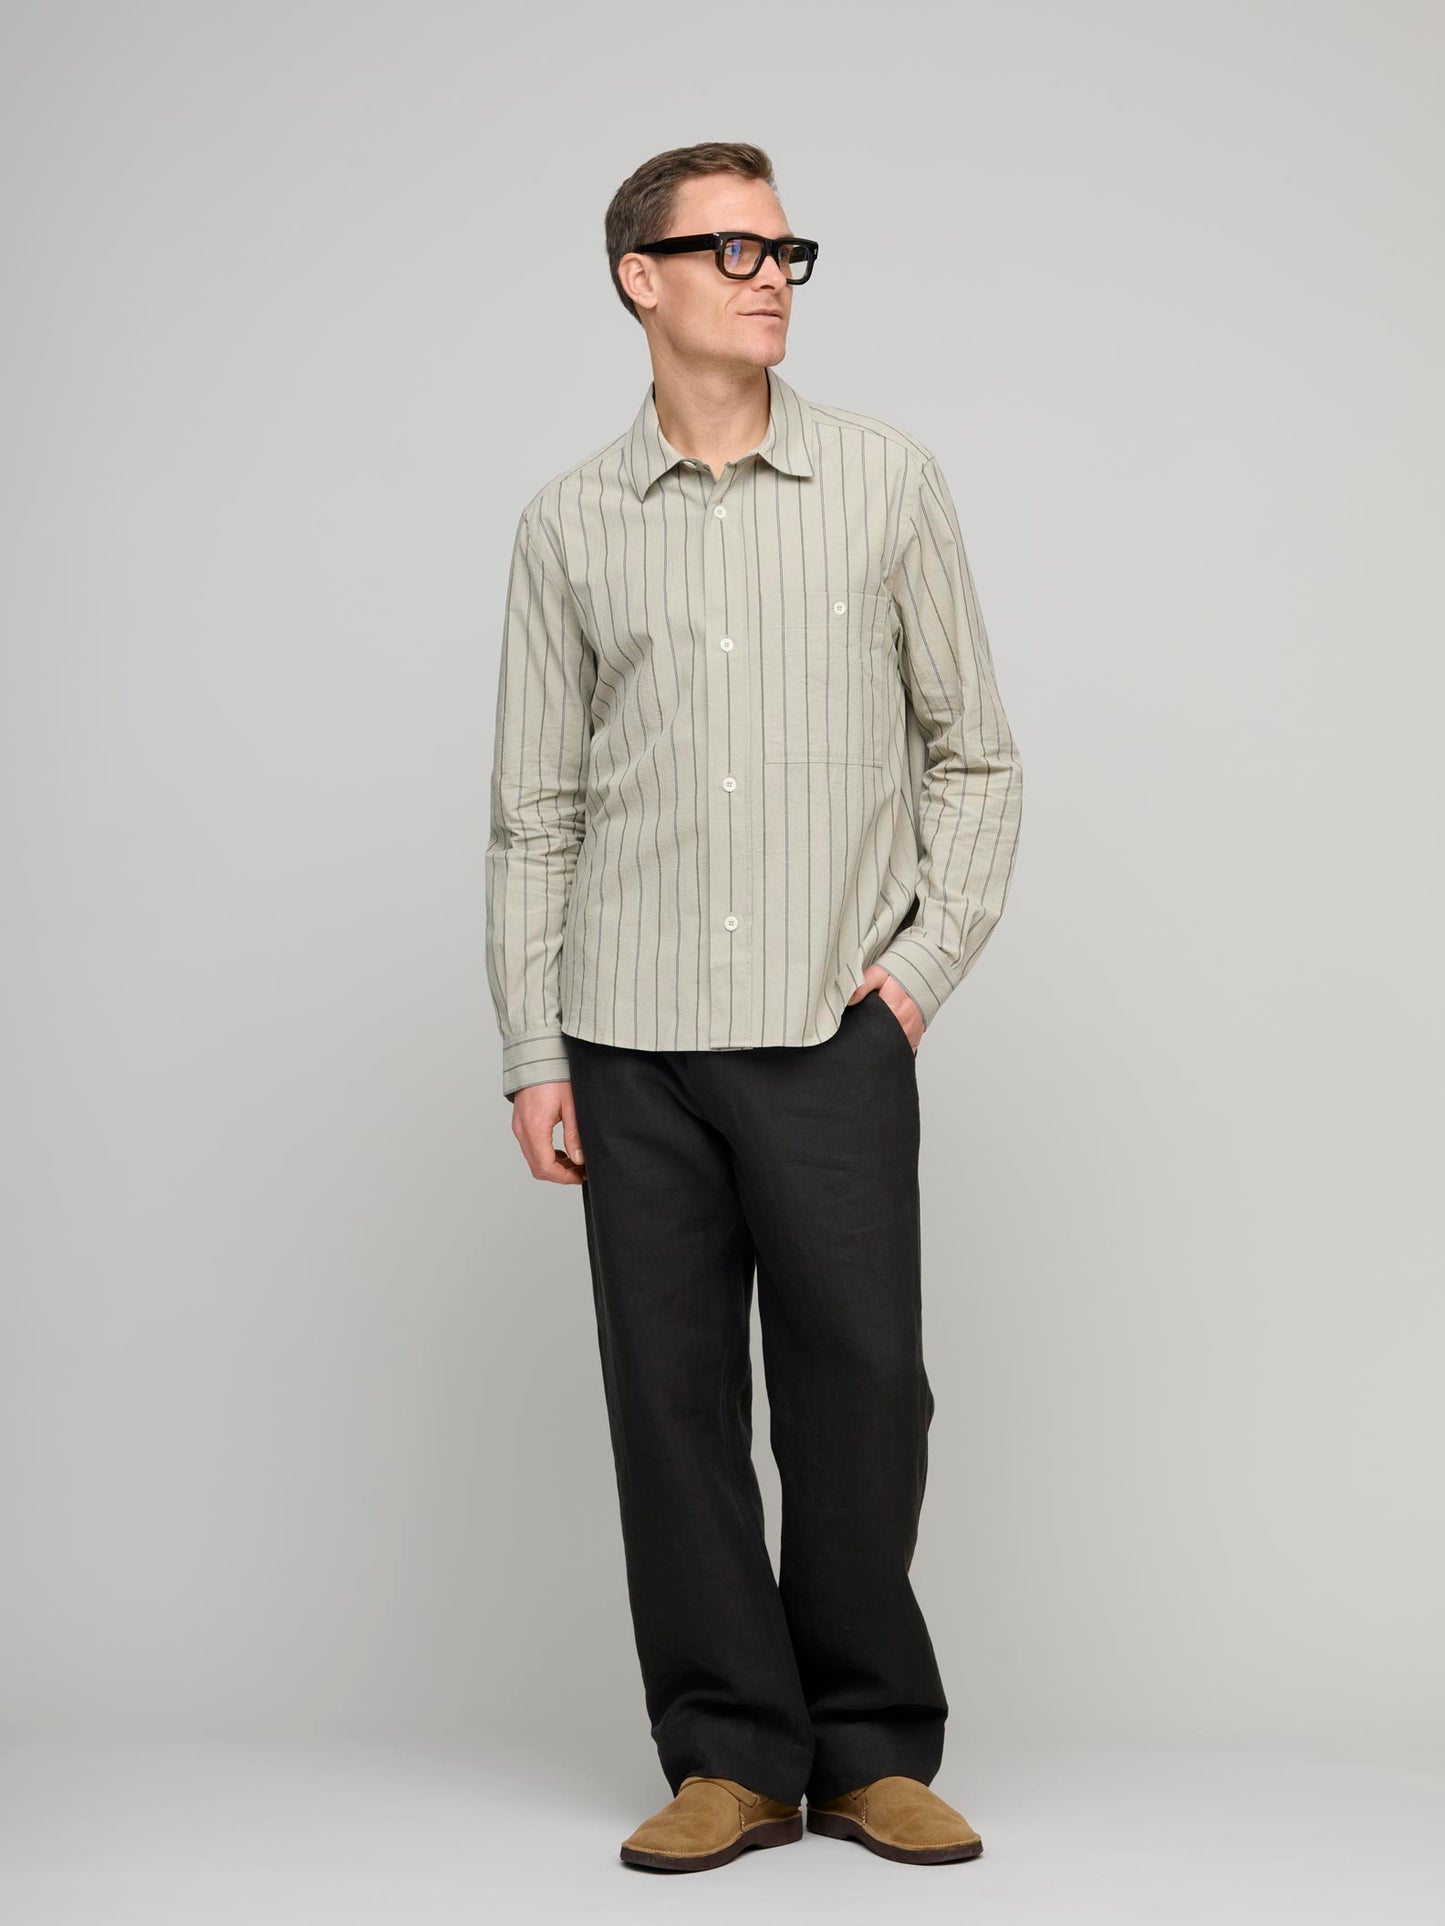 Overall Shirt Wide Stripe Cotton Linen, Stone/Navy/Bark